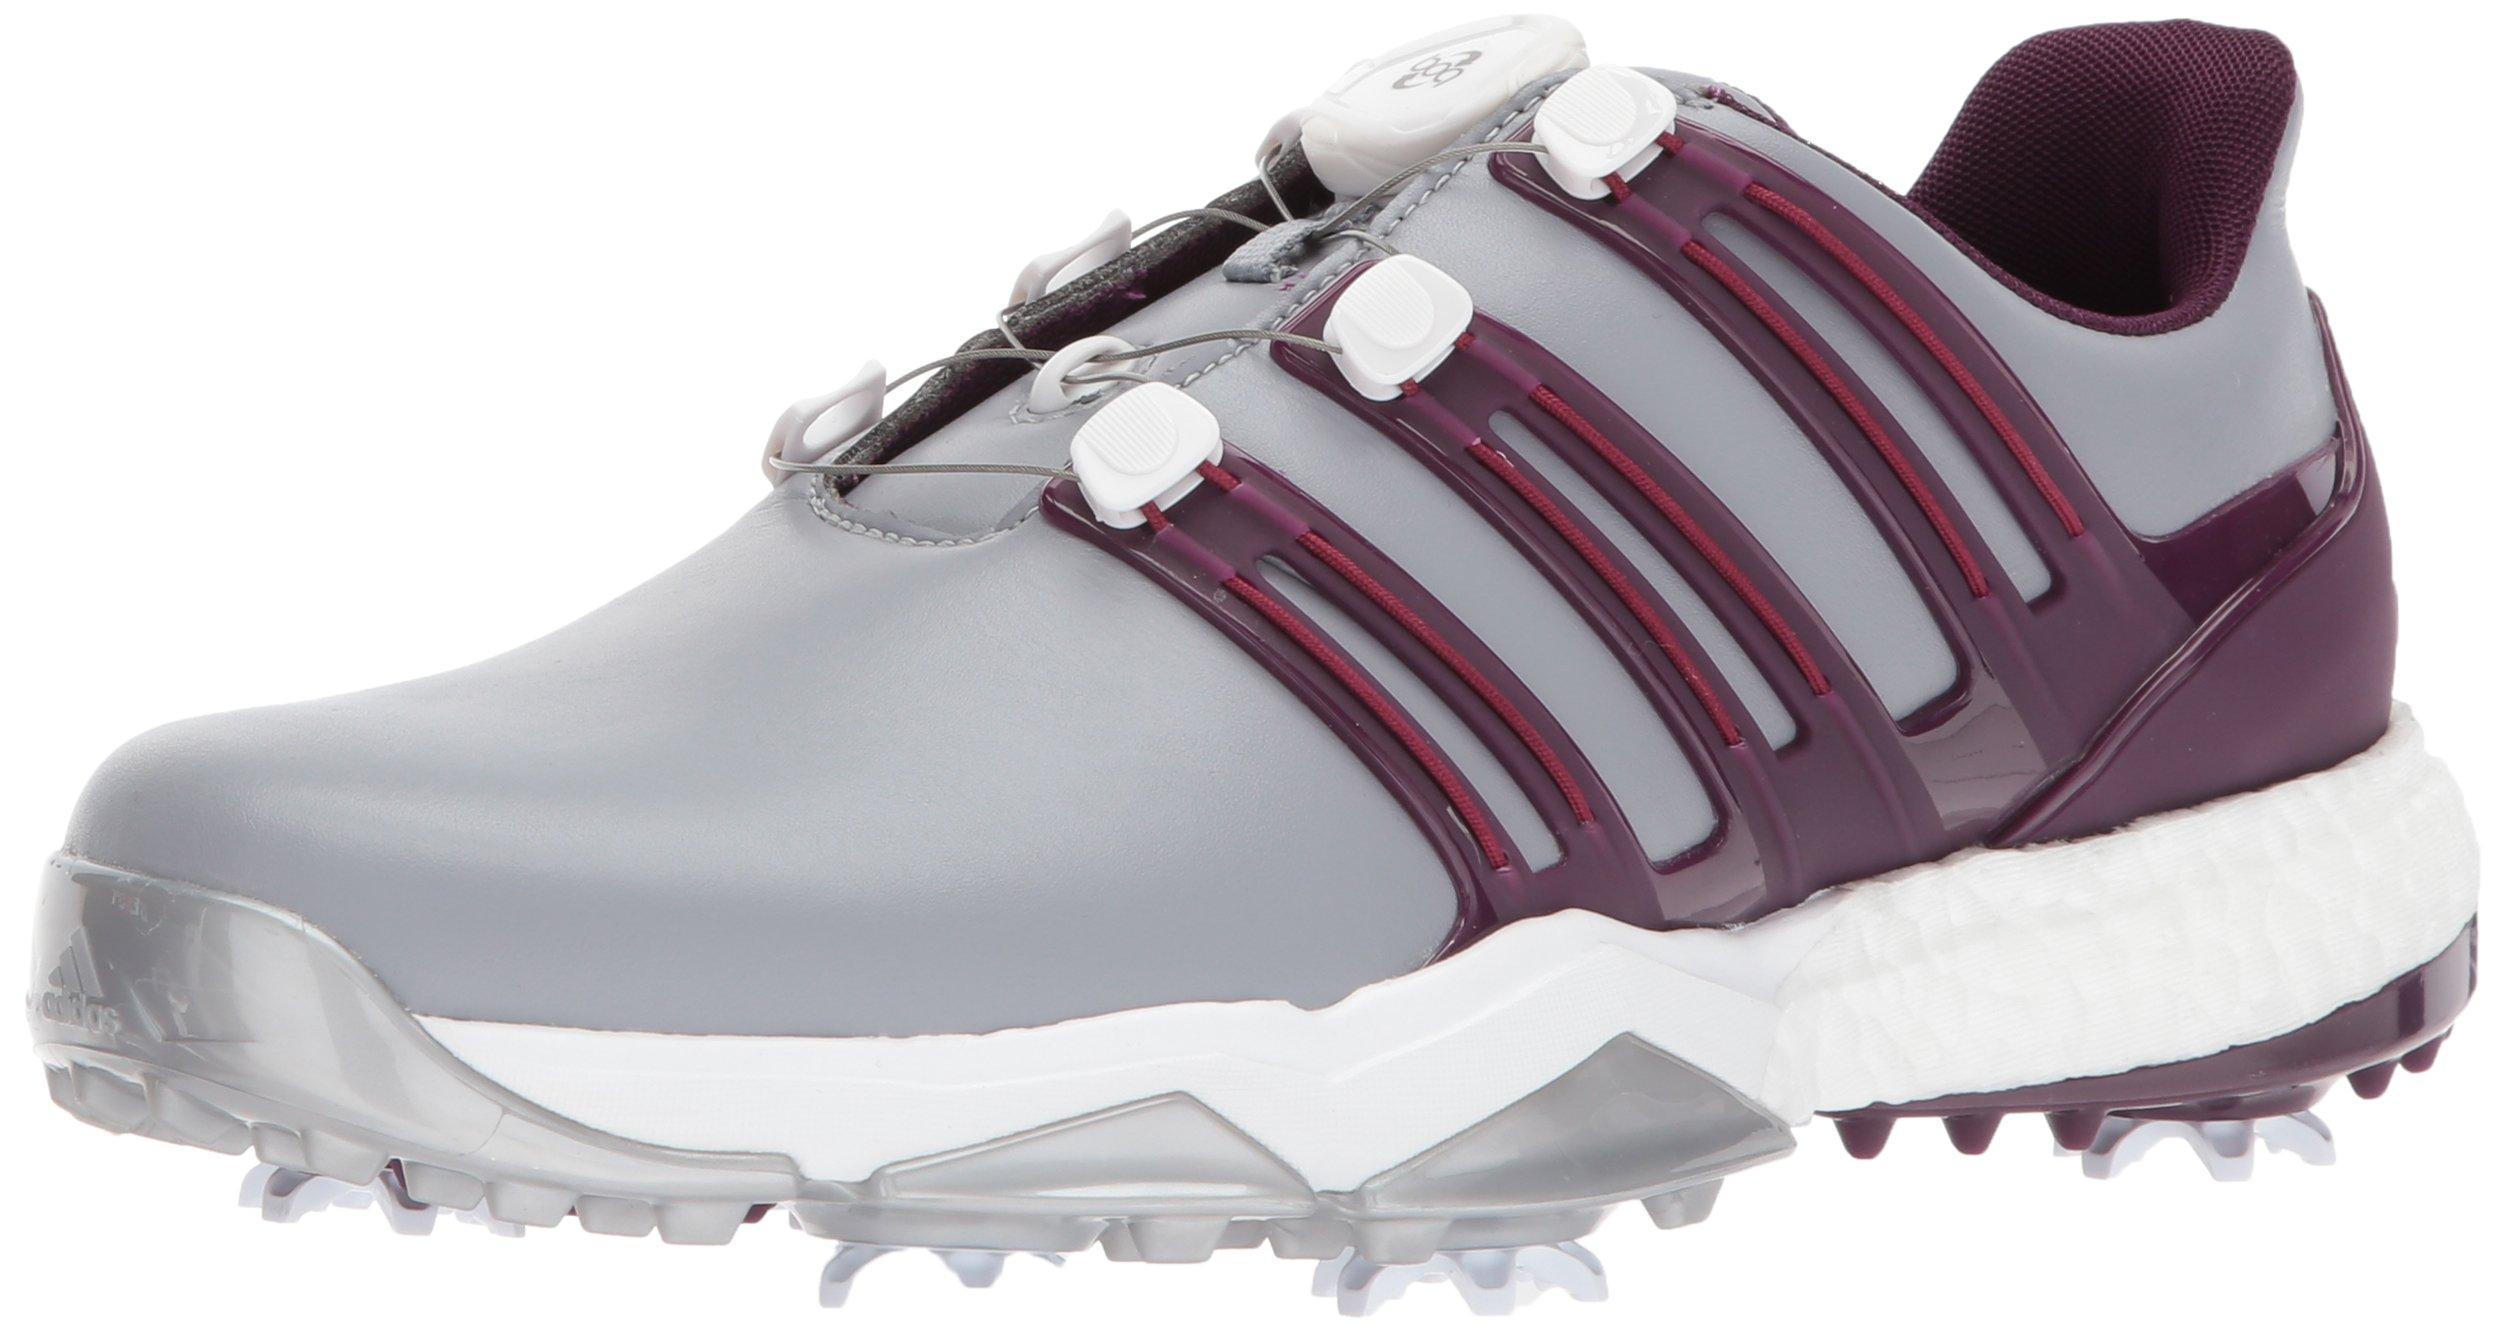 adidas powerband boa boost golf shoes